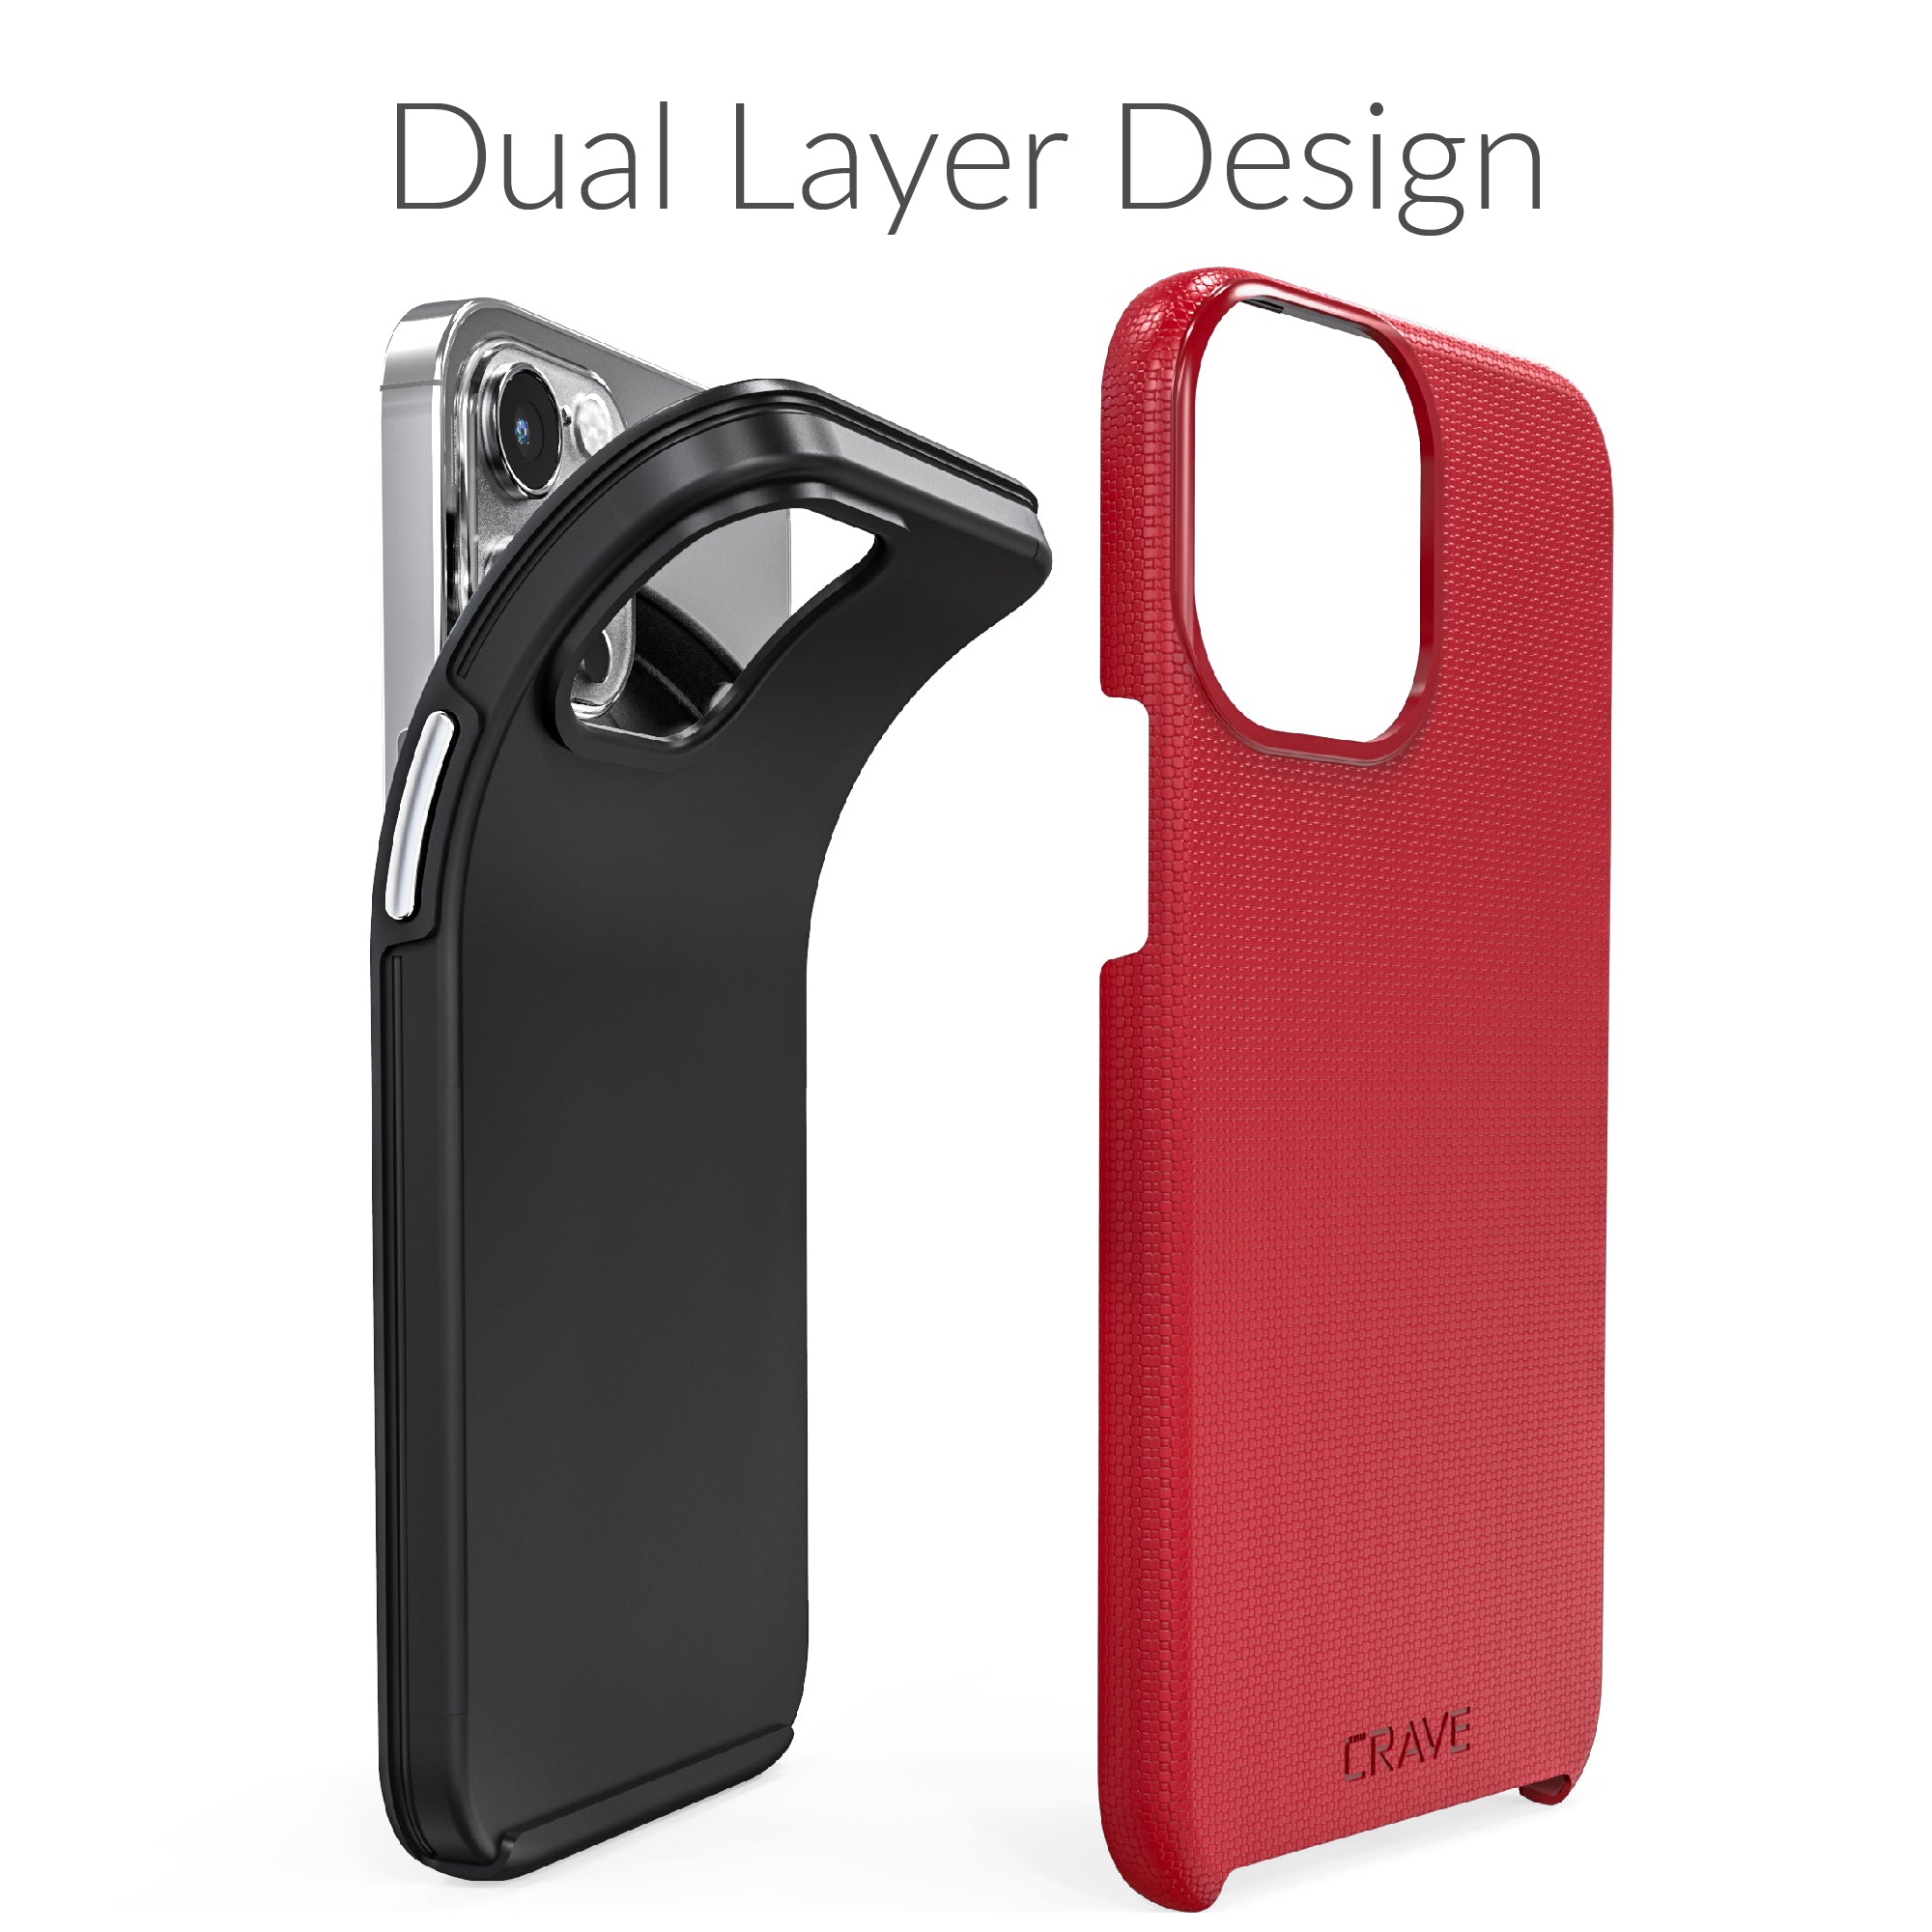 iPhone 12 Pro Max Case Dual Guard